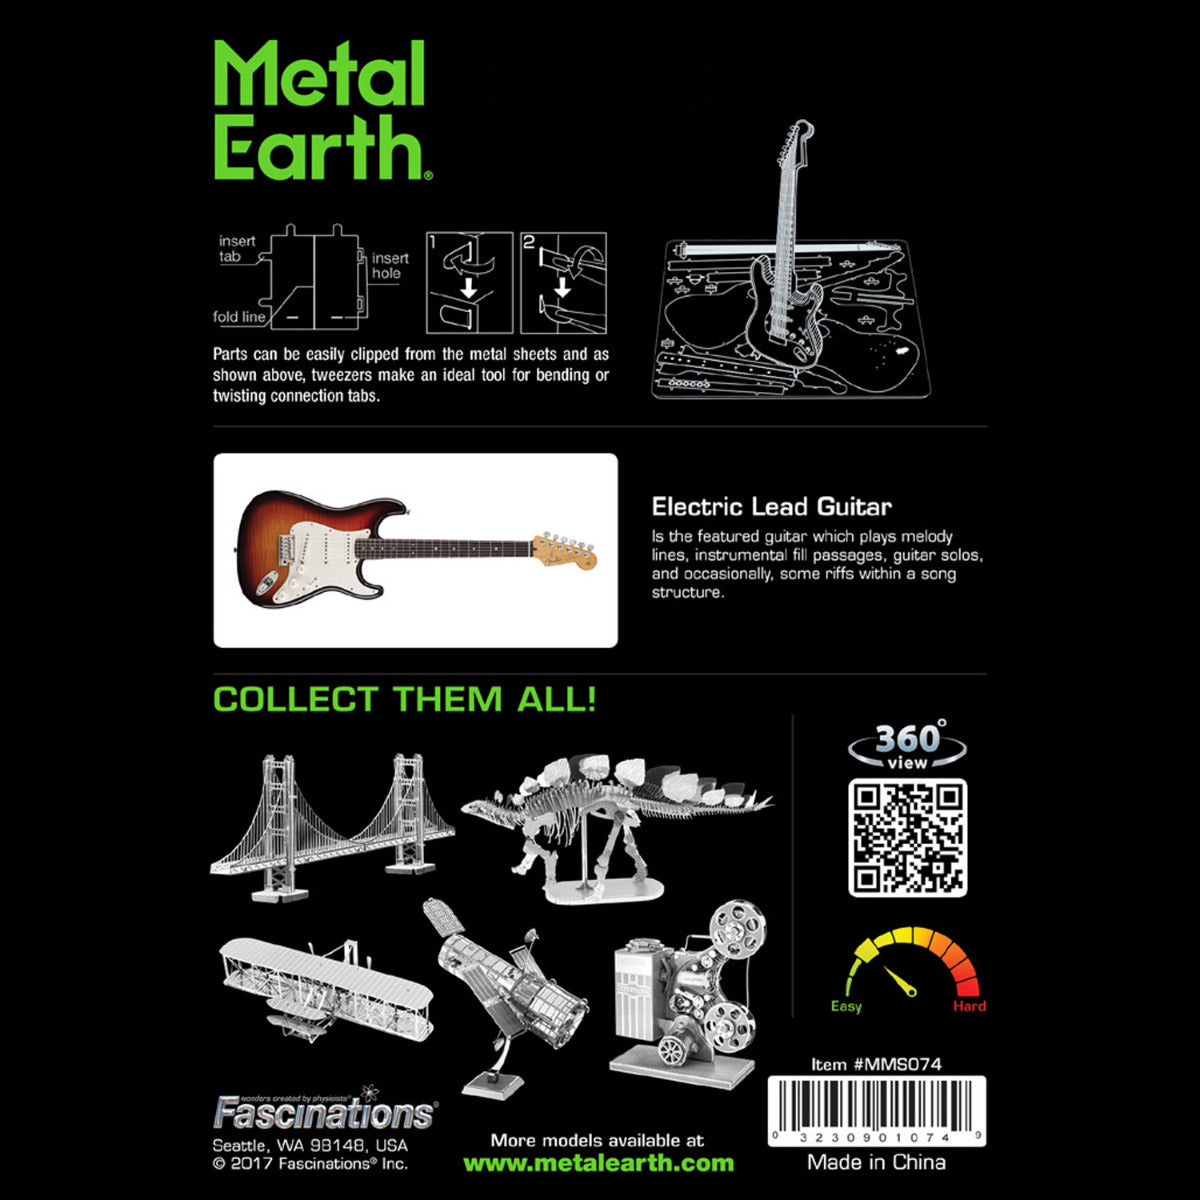 Metal Earth Metallbausätze MMS074 Electric Lead Guitar Elektrische Lead Gitarre Metall Modell